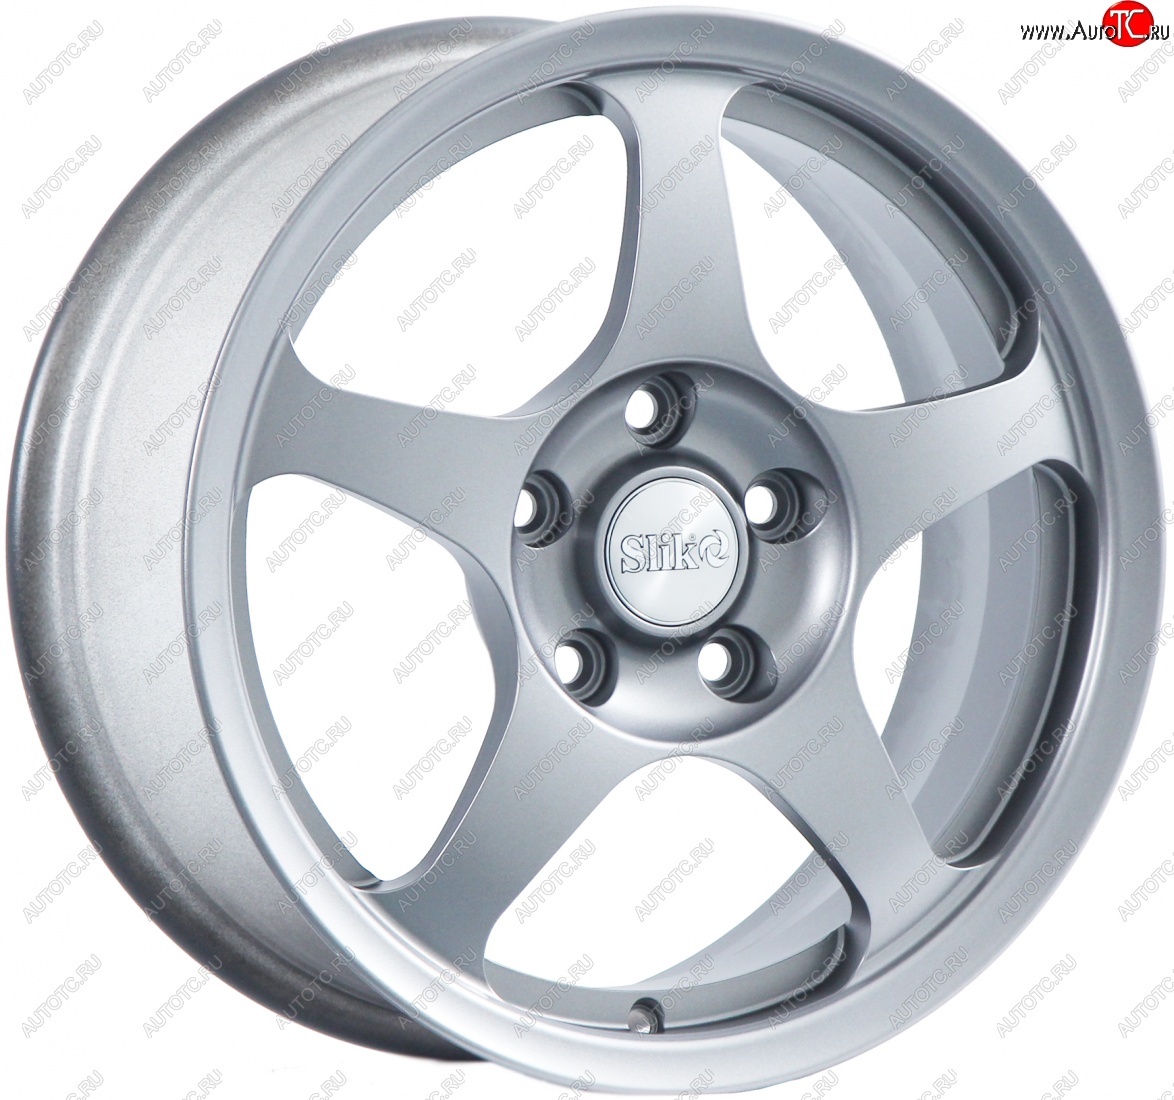 10 499 р. Кованый диск Slik classik R16x6.5 Яркое-блестящее серебро (HPB) 6.5x16 Opel Insignia A дорестайлинг седан (2008-2013) 5x120.0xDIA67.1xET41.0 (Цвет: HPB)